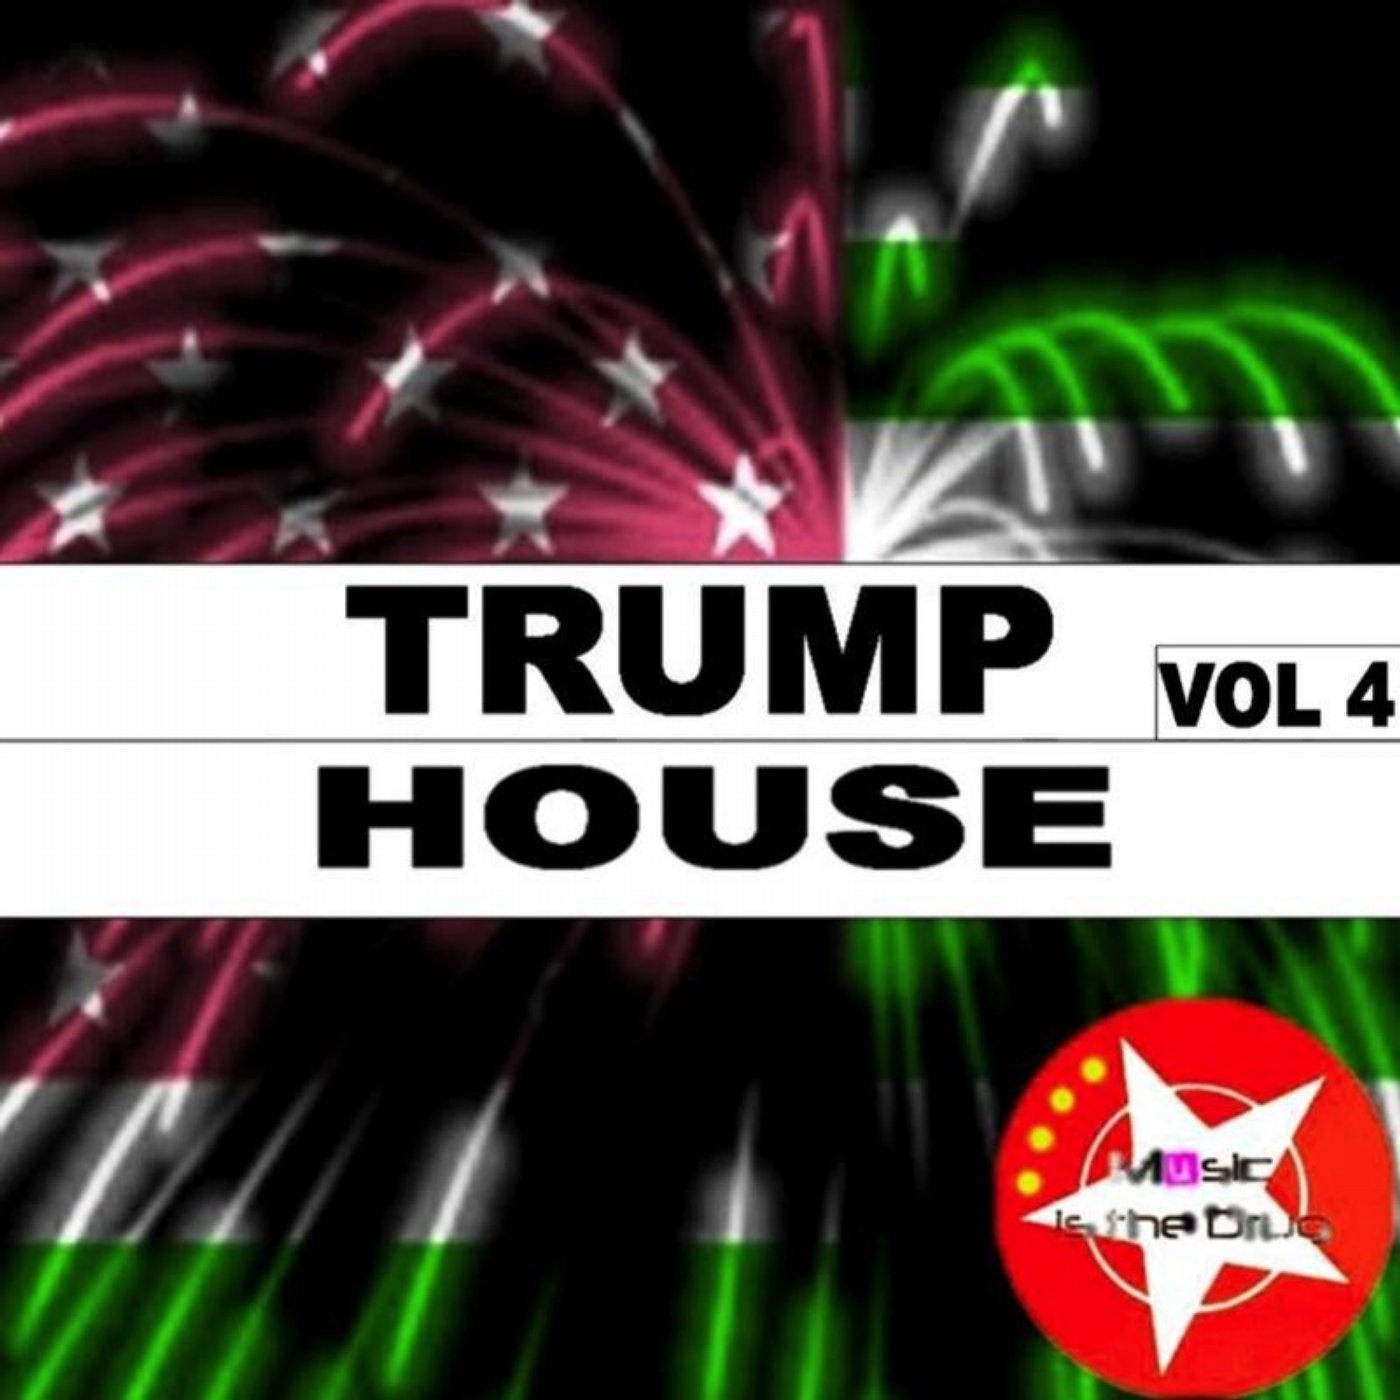 Trump House Vol. 4